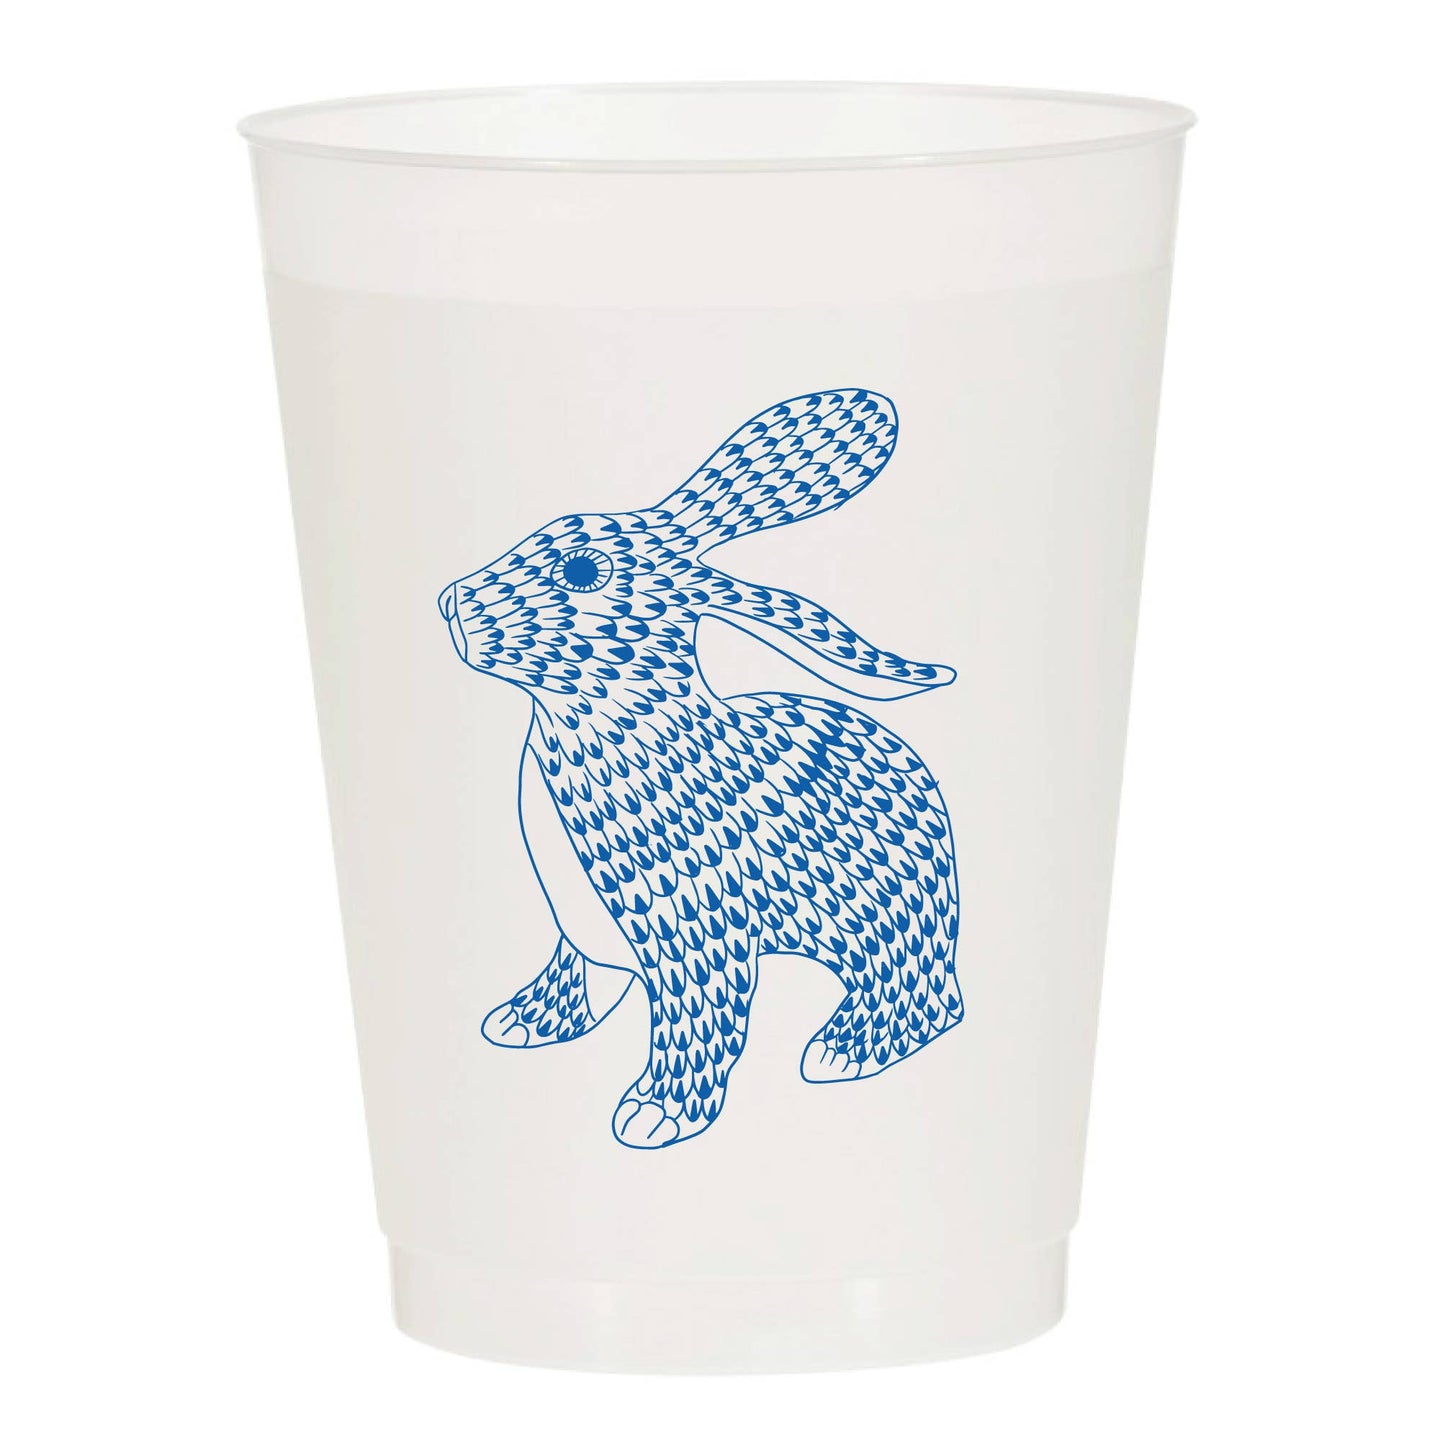 Sip Hip Hooray - Herend Bunny Reusable Cups - Set of 10 Cups (Blue)